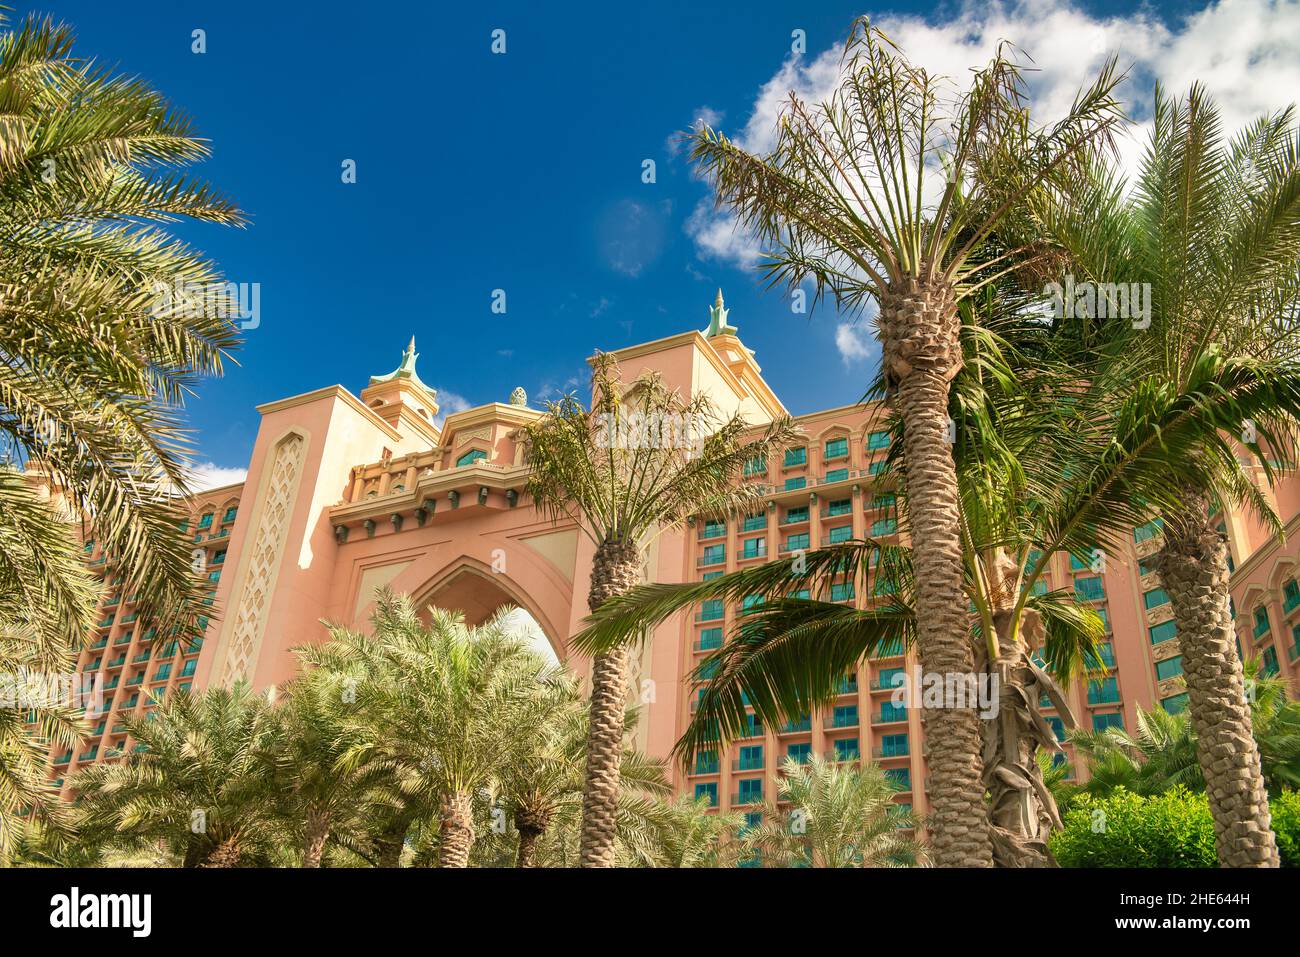 DUBAI, UAE - DECEMBER 10, 2016: The Atlantis Hotel is a major city attraction in Palm Jumeirah Stock Photo